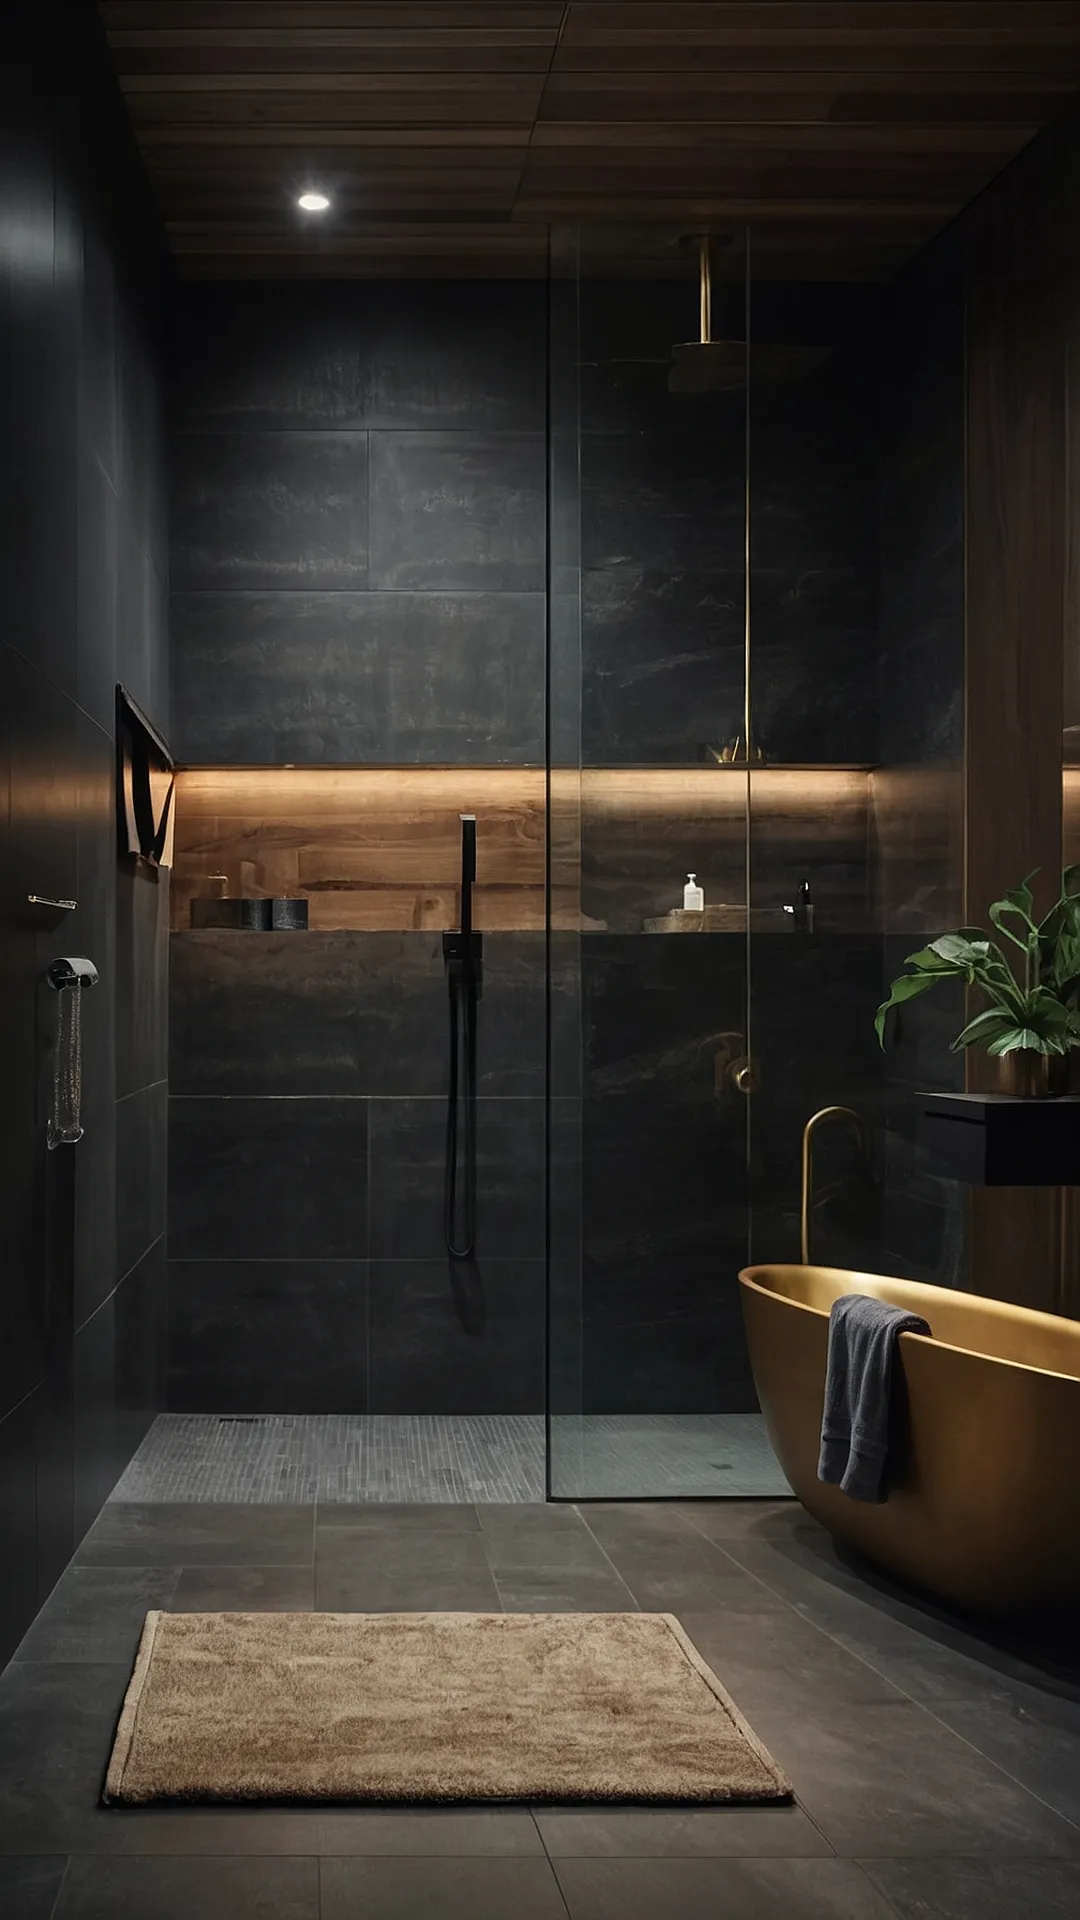 Sleek and Stylish: Modern Bathroom Inspirations